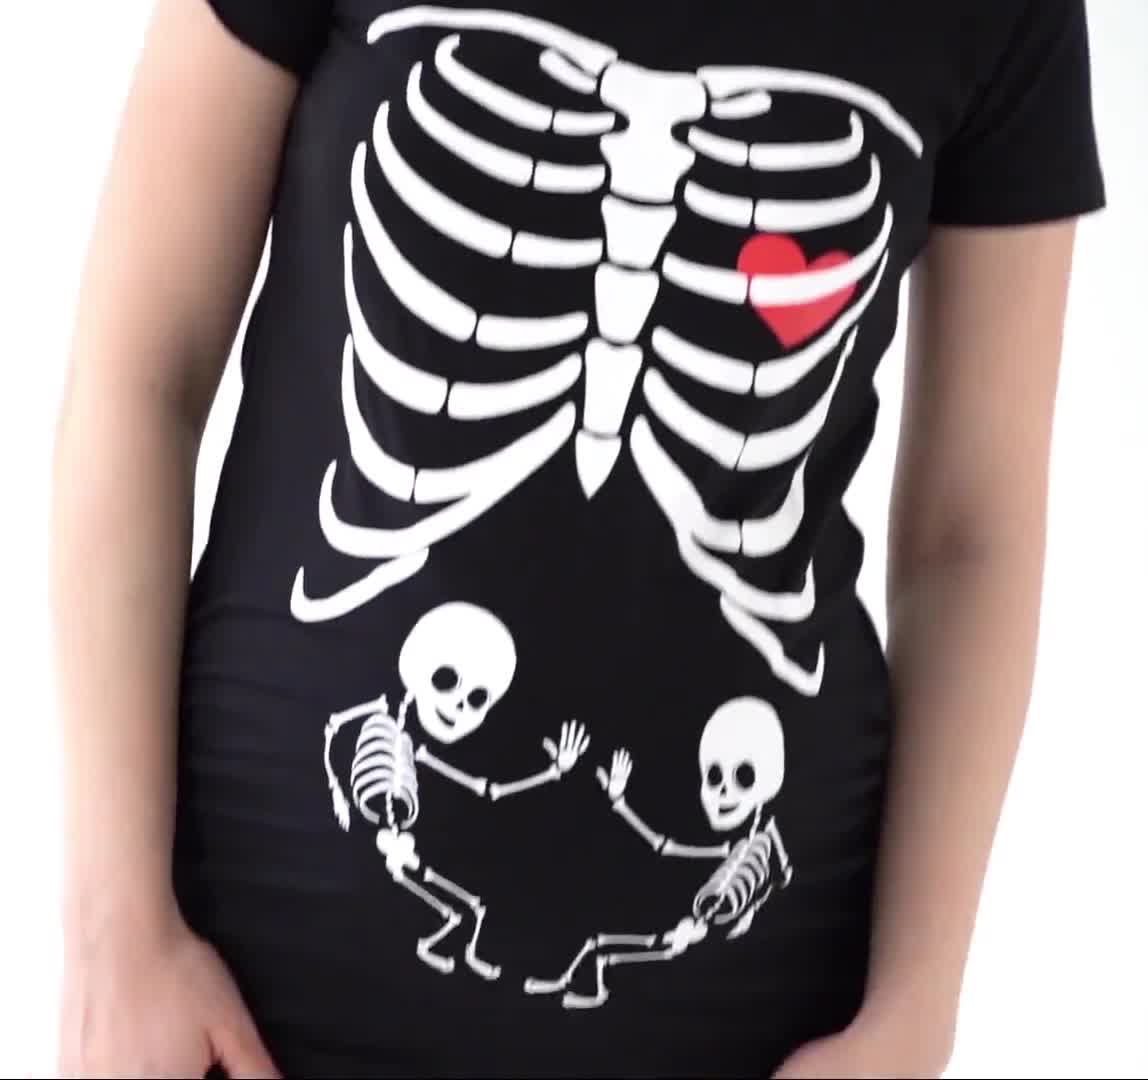 DJ Disc Jockey X-Ray Skeleton Ladies MATERNITY T-Shirt Music PREGNANCY Top Gift